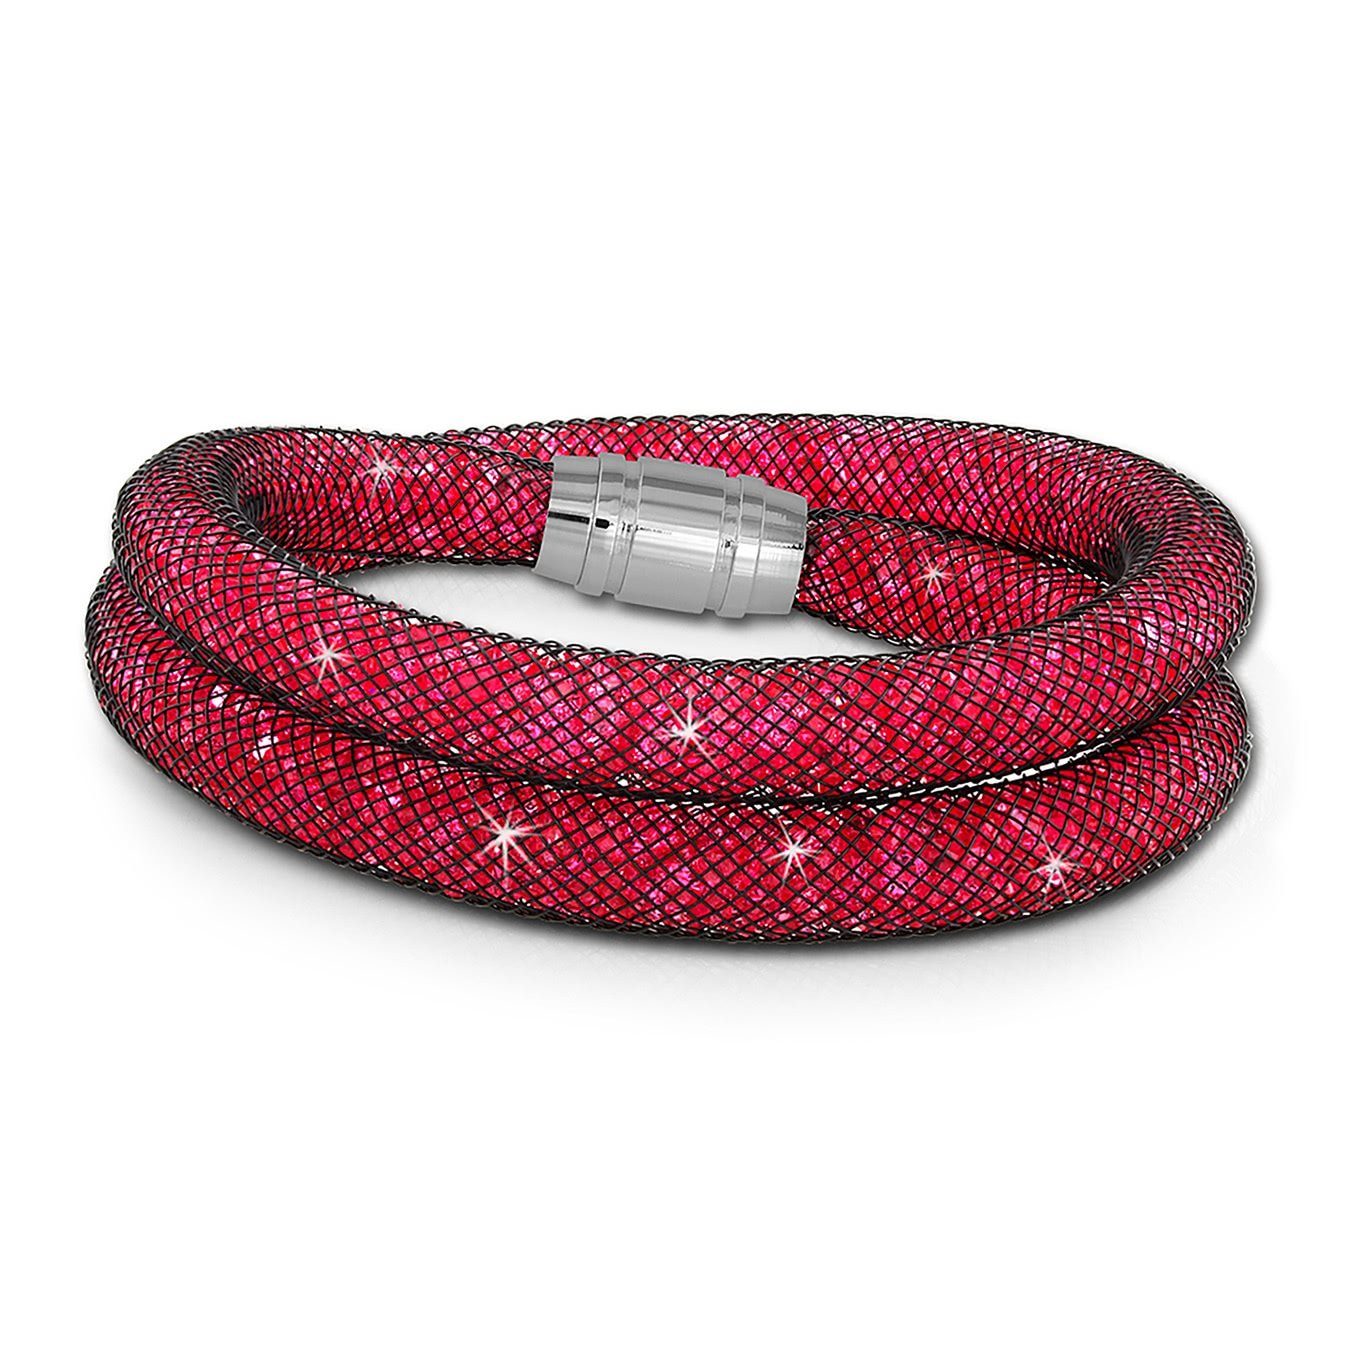 rot Damenarmband Edelstahlarmband Armband SilberDream (Armband), SilberDream Arm-Schmuck Farbe: rot, Edelstahl-Verschluss, mit fuchsiafarben